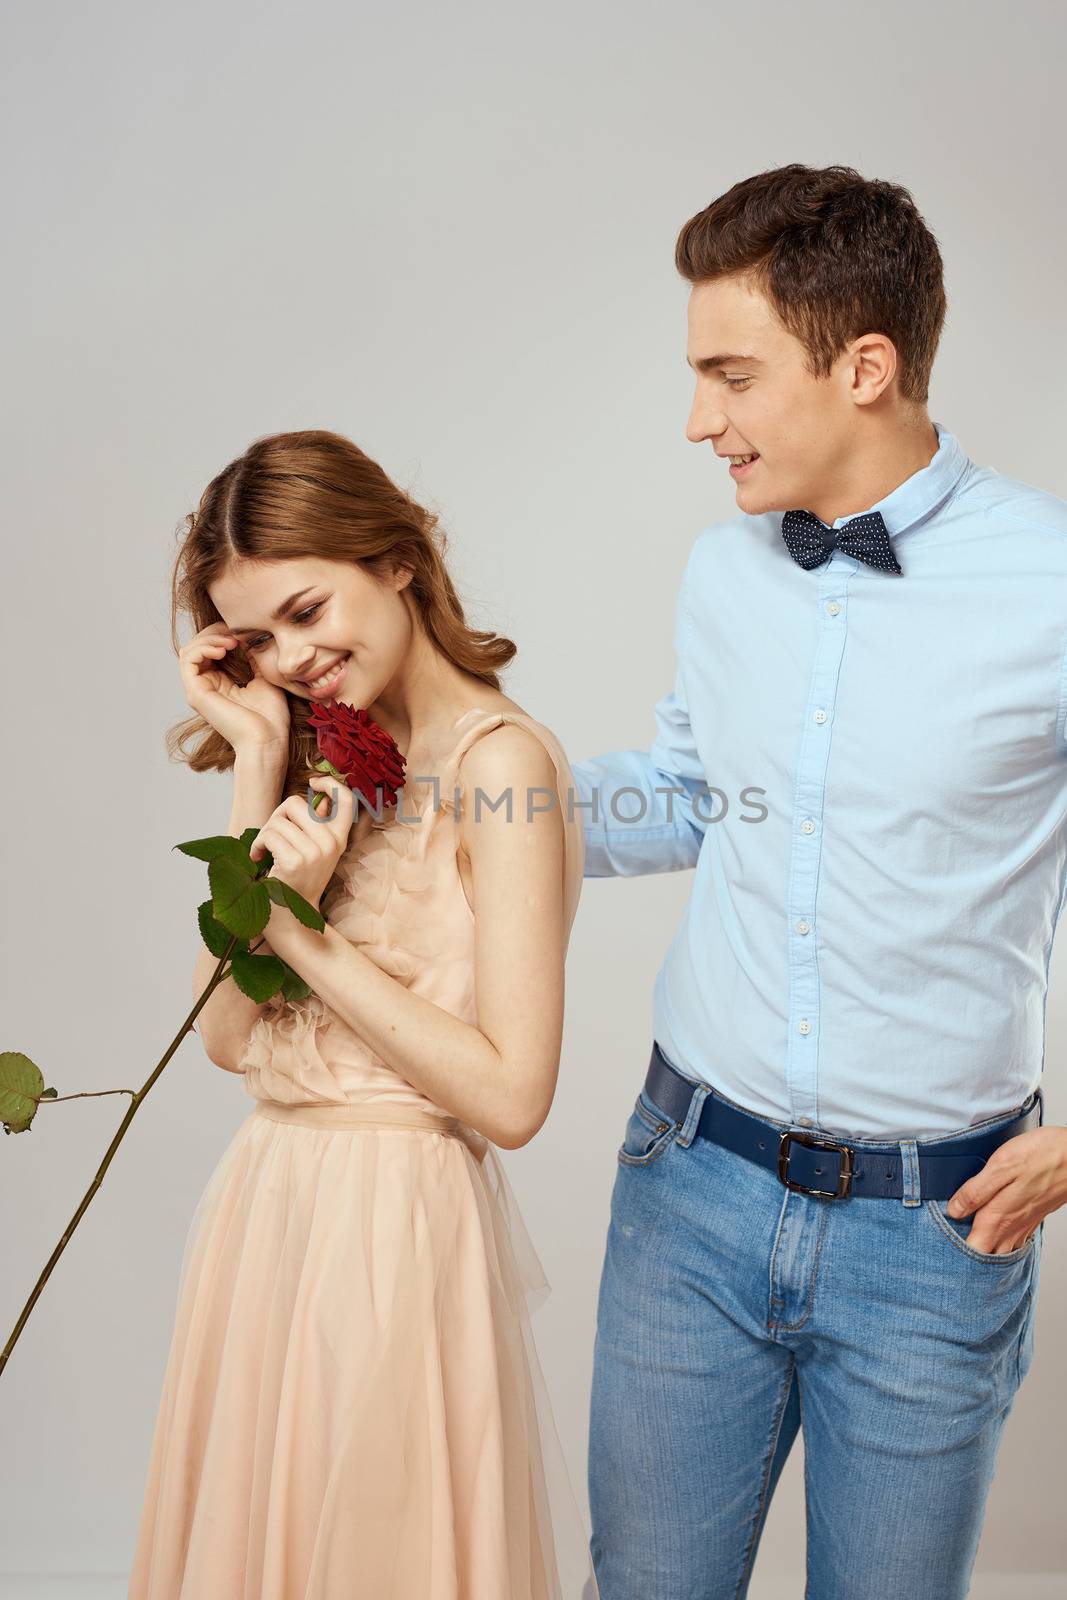 beautiful couple relationship rose gift as romance hug light background. High quality photo